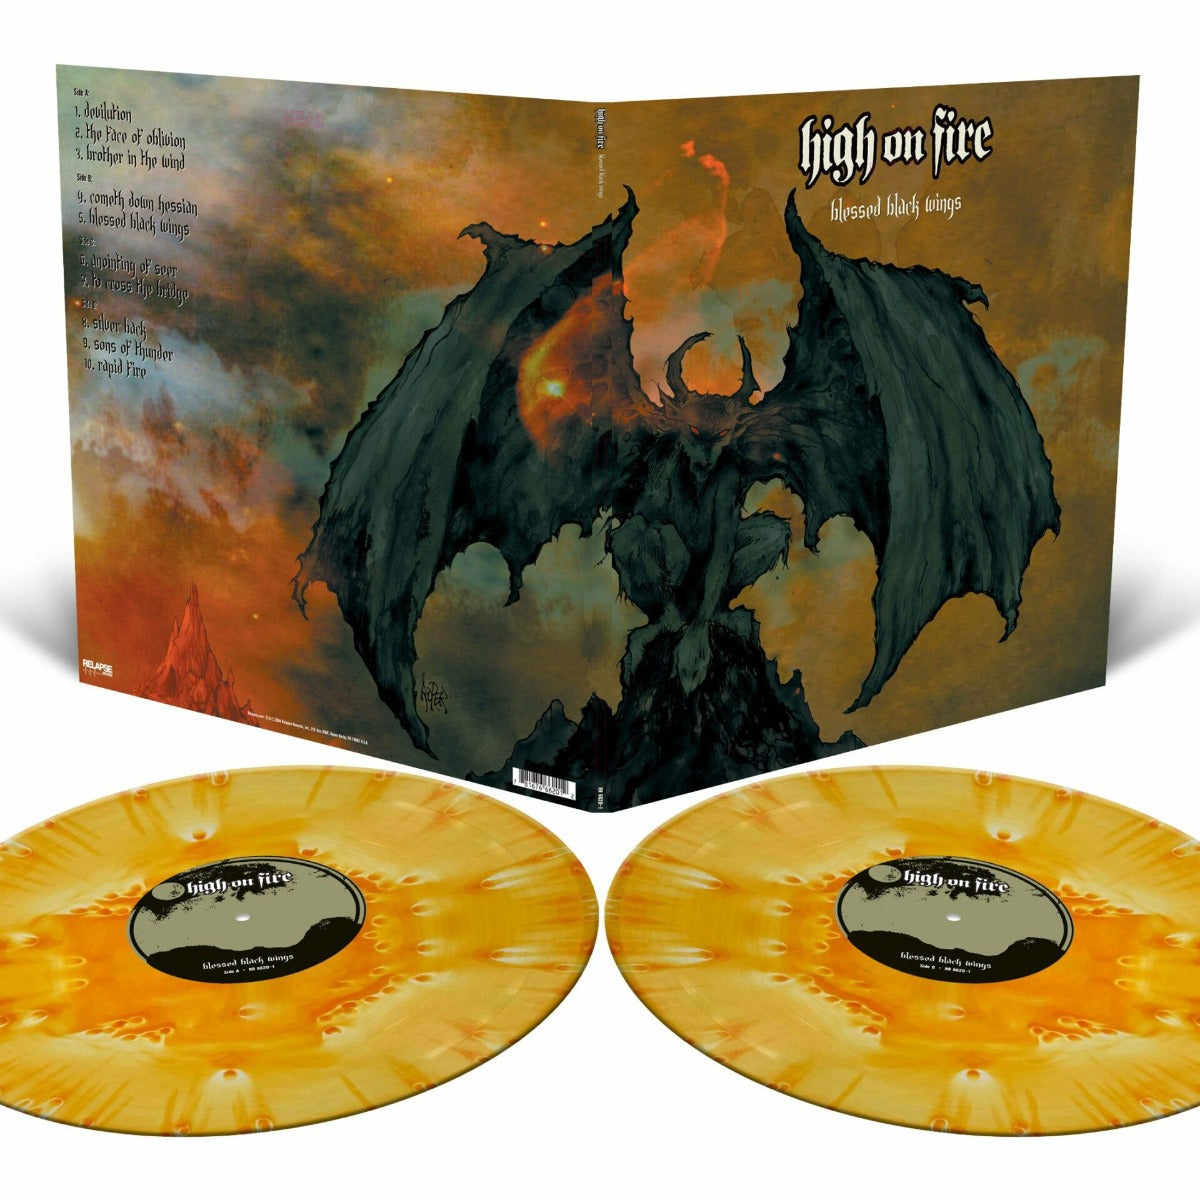 High on Fire - Blessed Black Wings (Colored Vinyl, Blue, Orange) (2 LP)